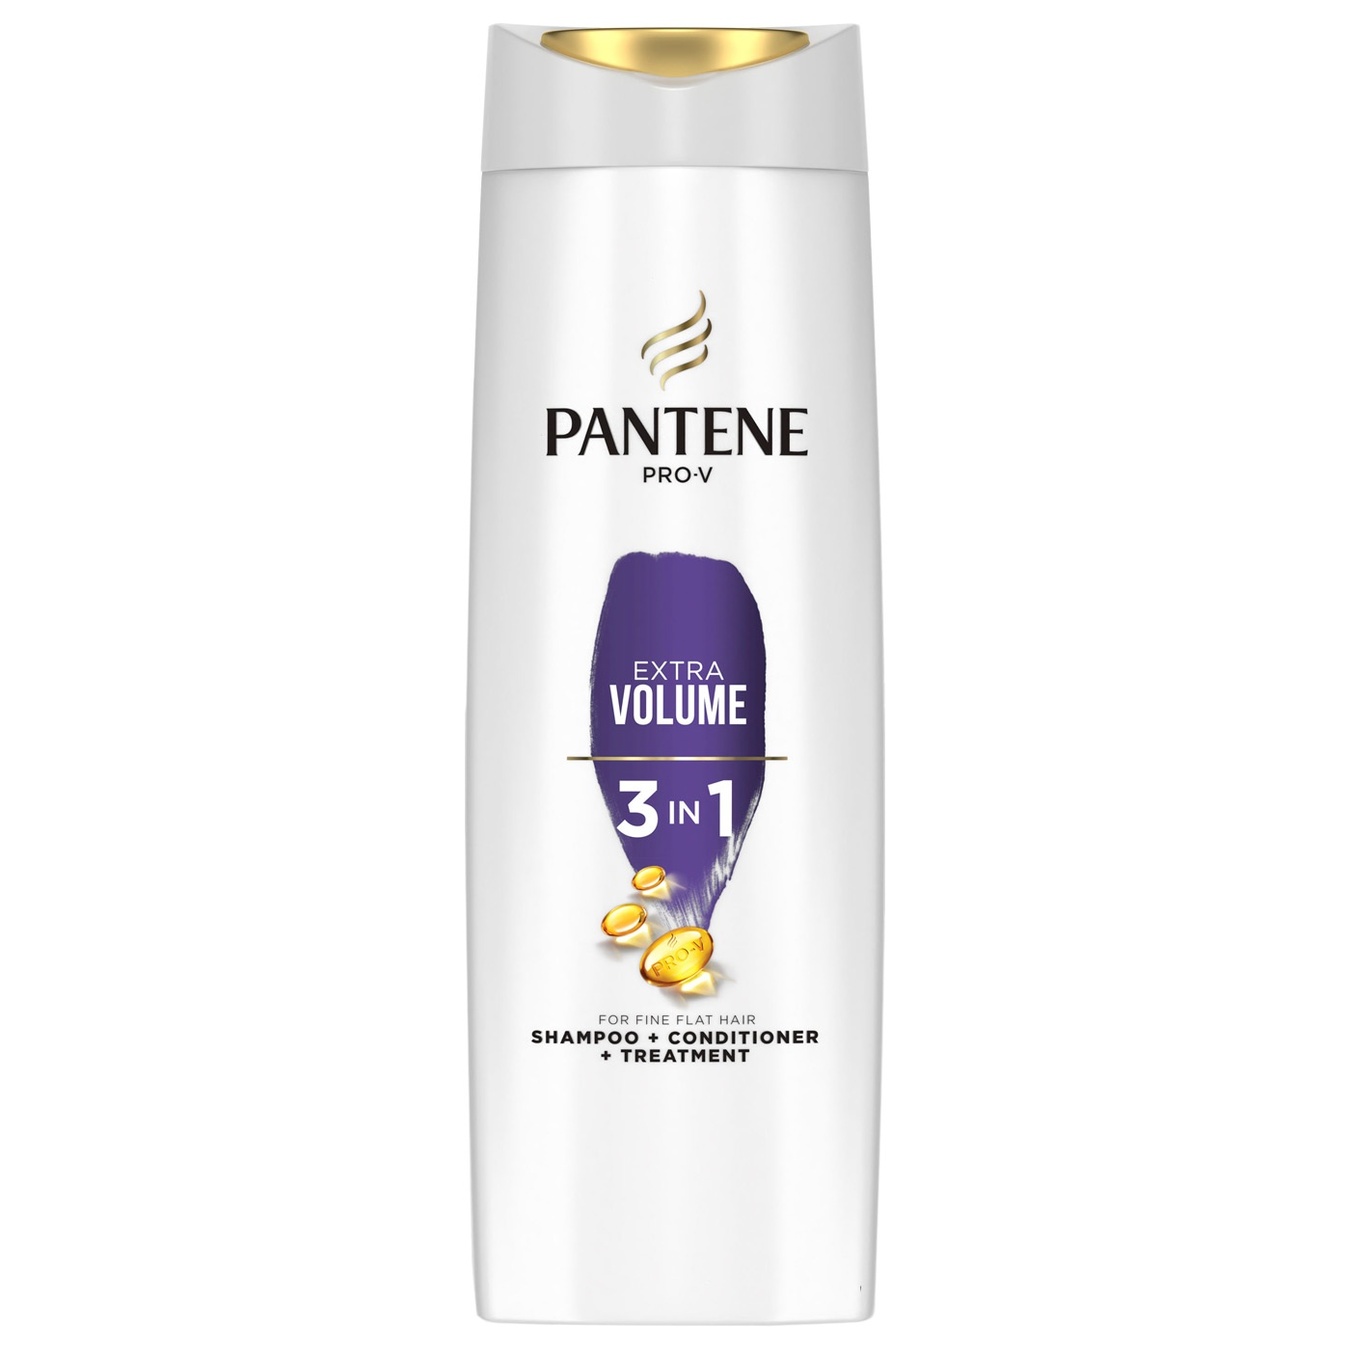 Shampoo Pantene 3 in 1 additional volume 360 ml